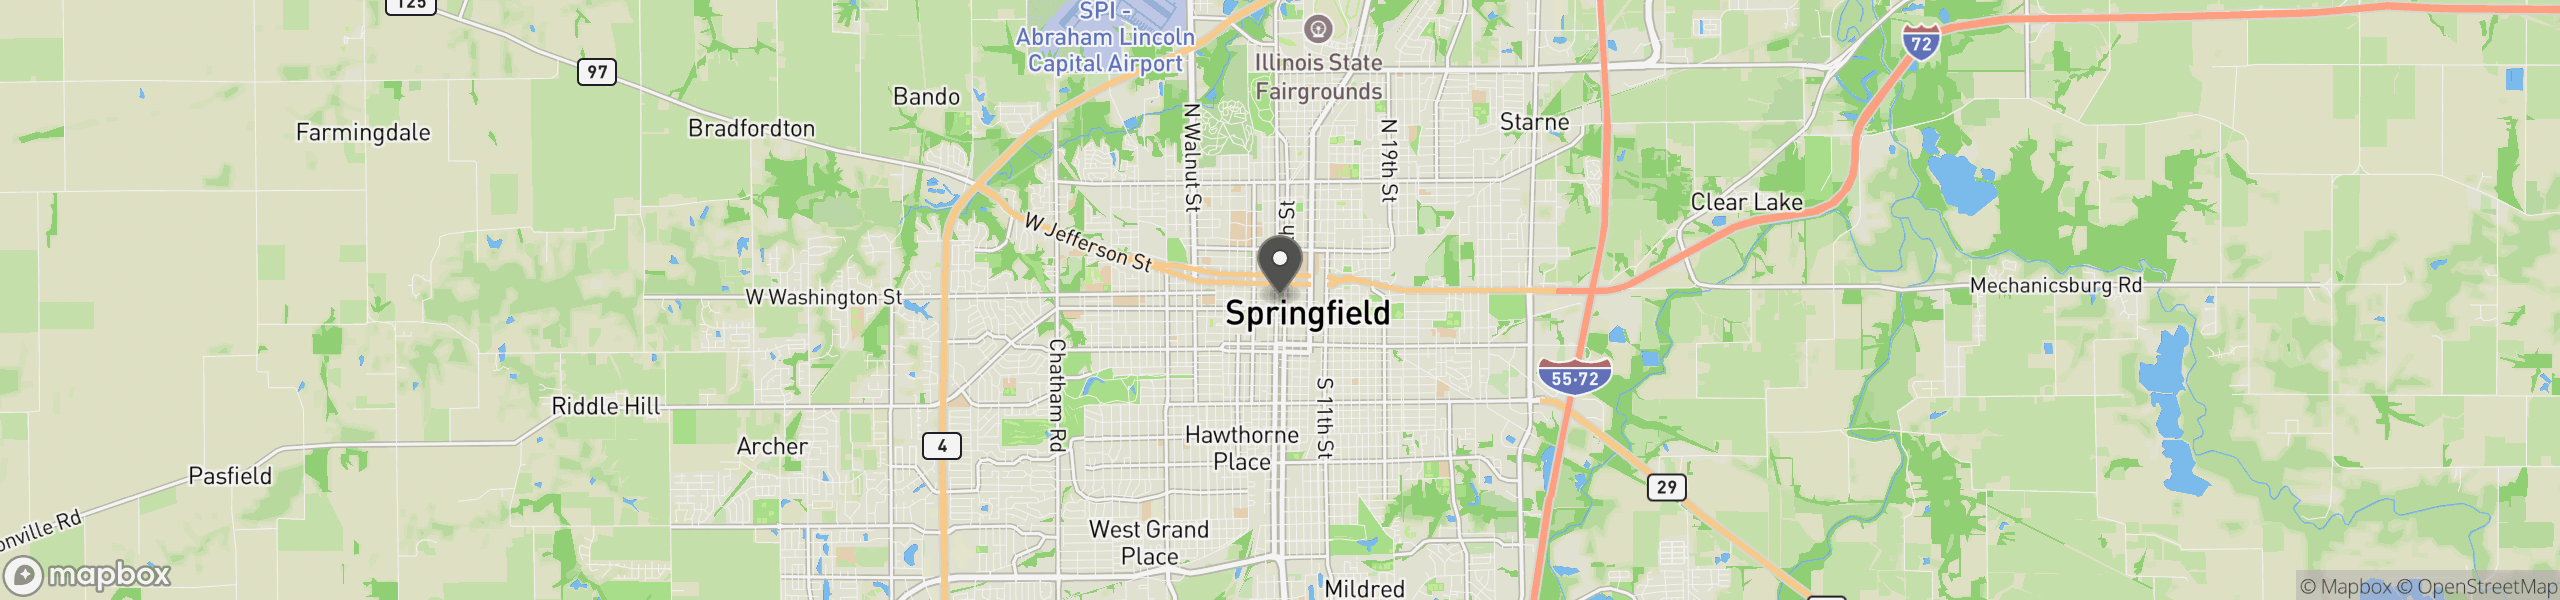 Springfield, IL 62701